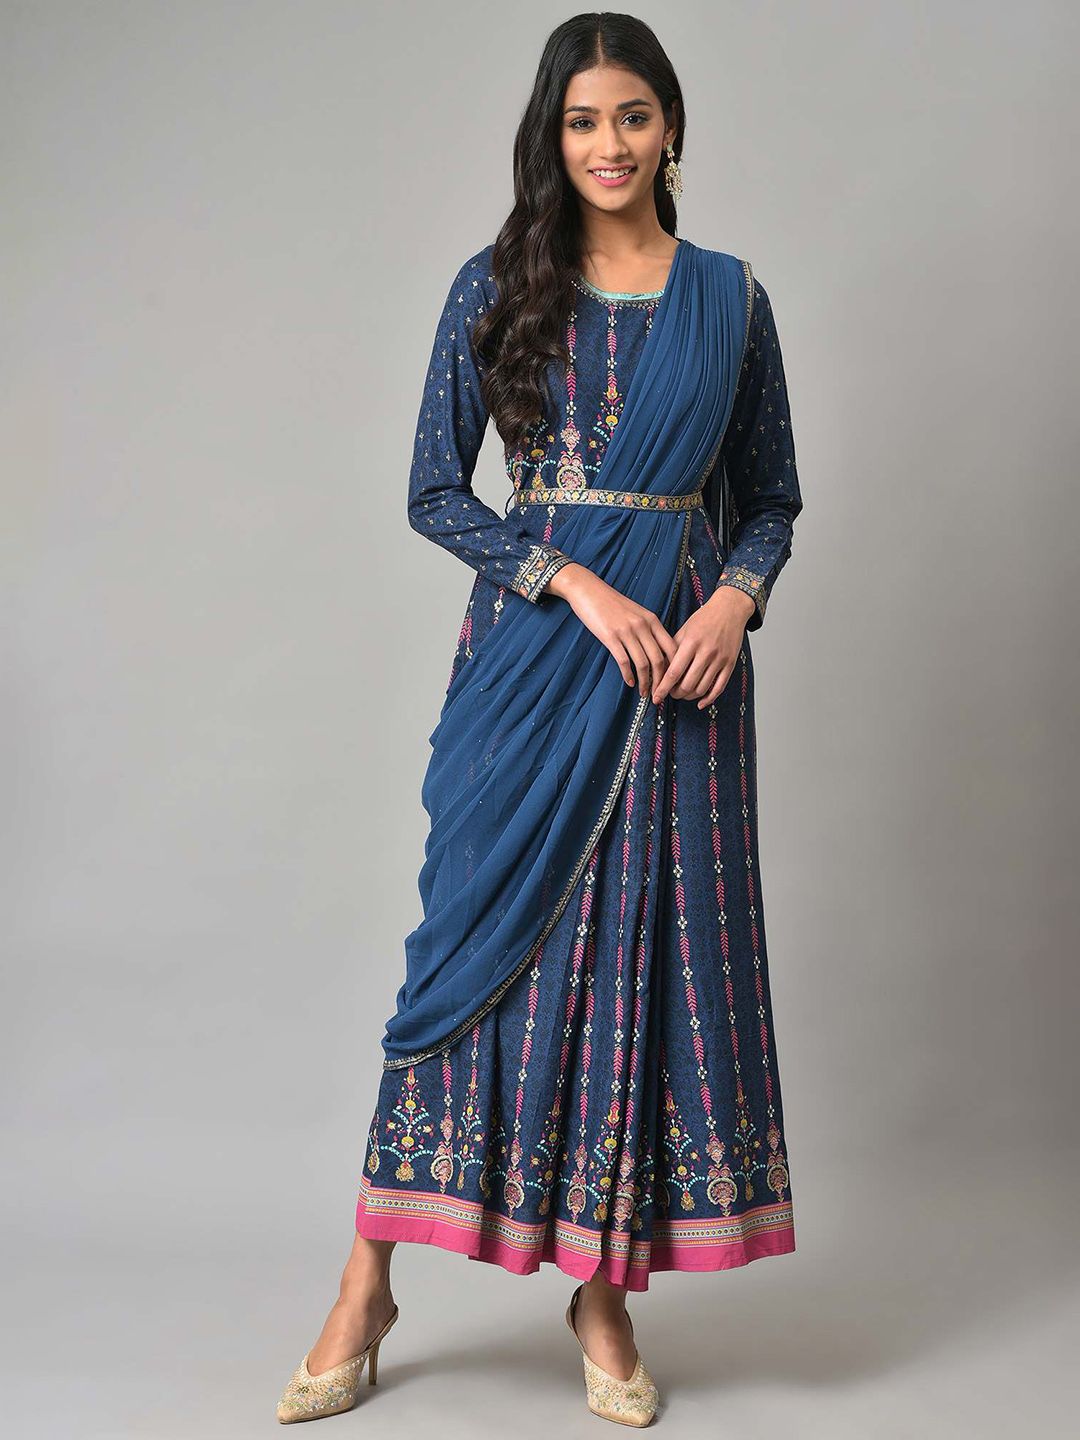 W Blue Ethnic Motifs Ethnic Maxi Dress Price in India